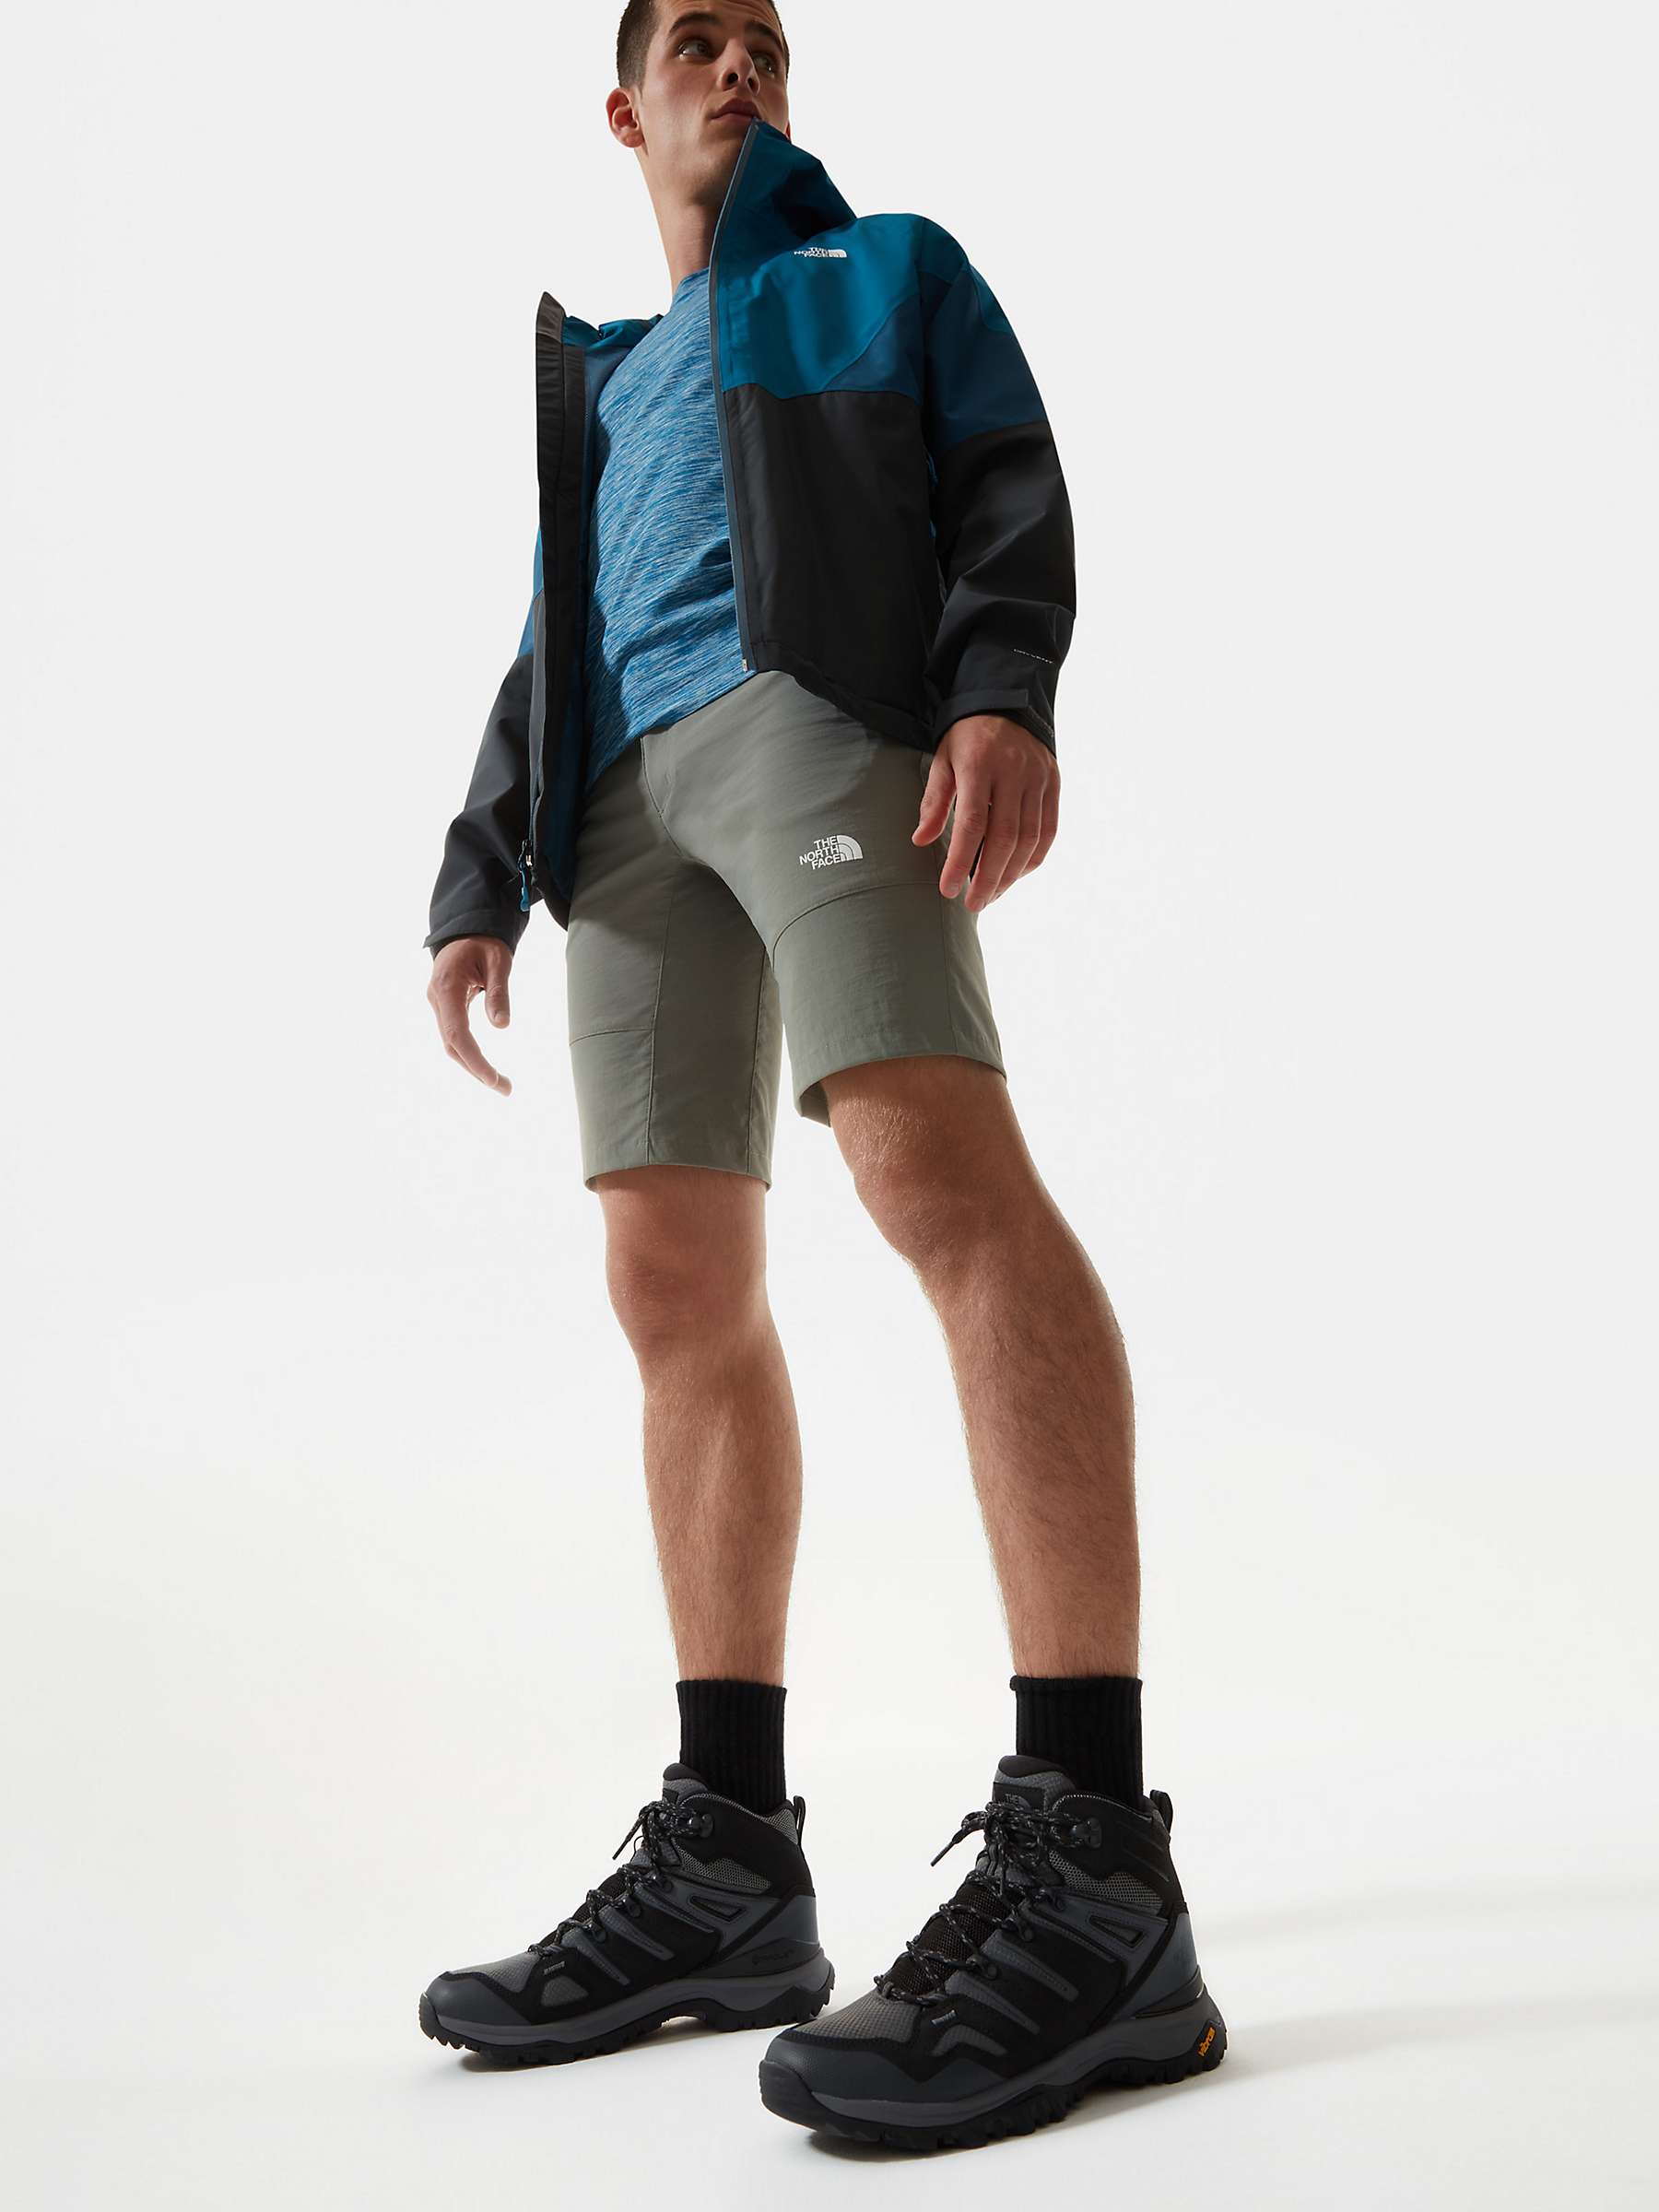 Buy The North Face Hedgehog FUTURELIGHT™ Men's Walking Boots Online at johnlewis.com